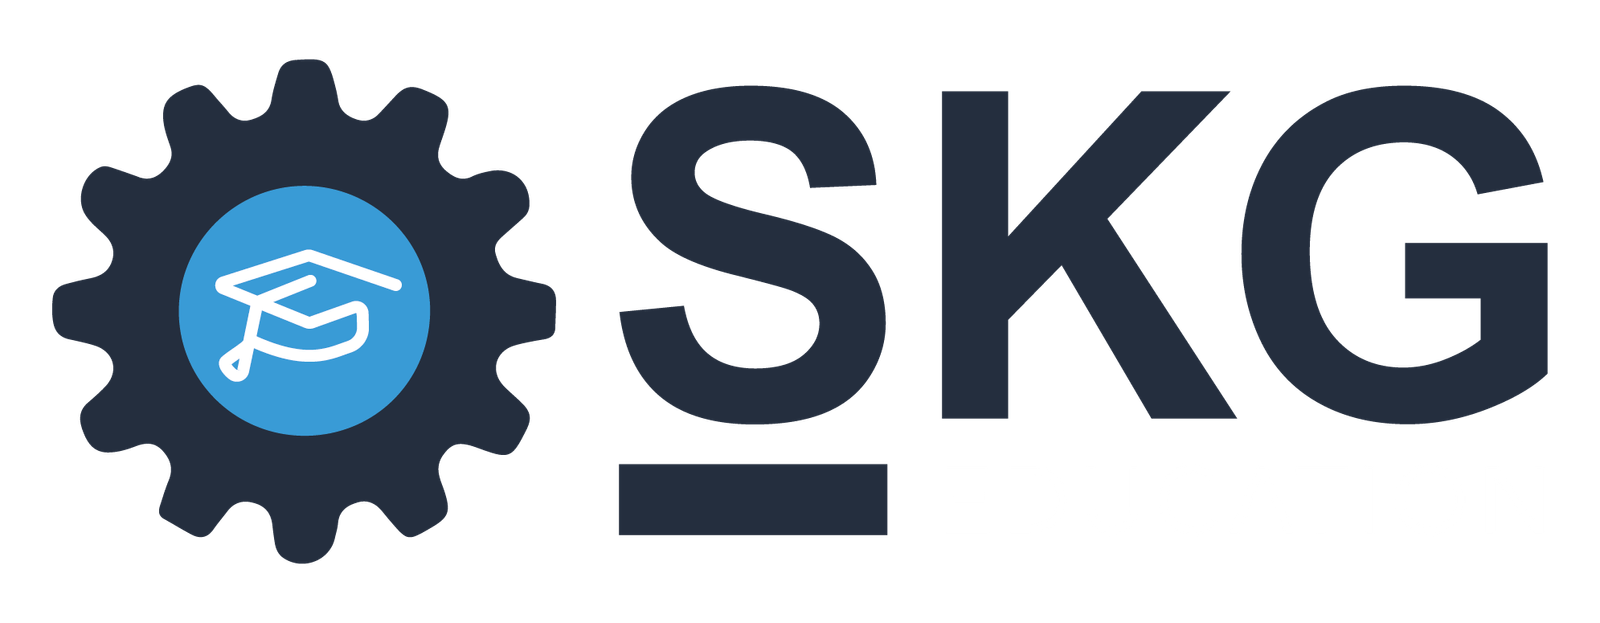 skg.education logo